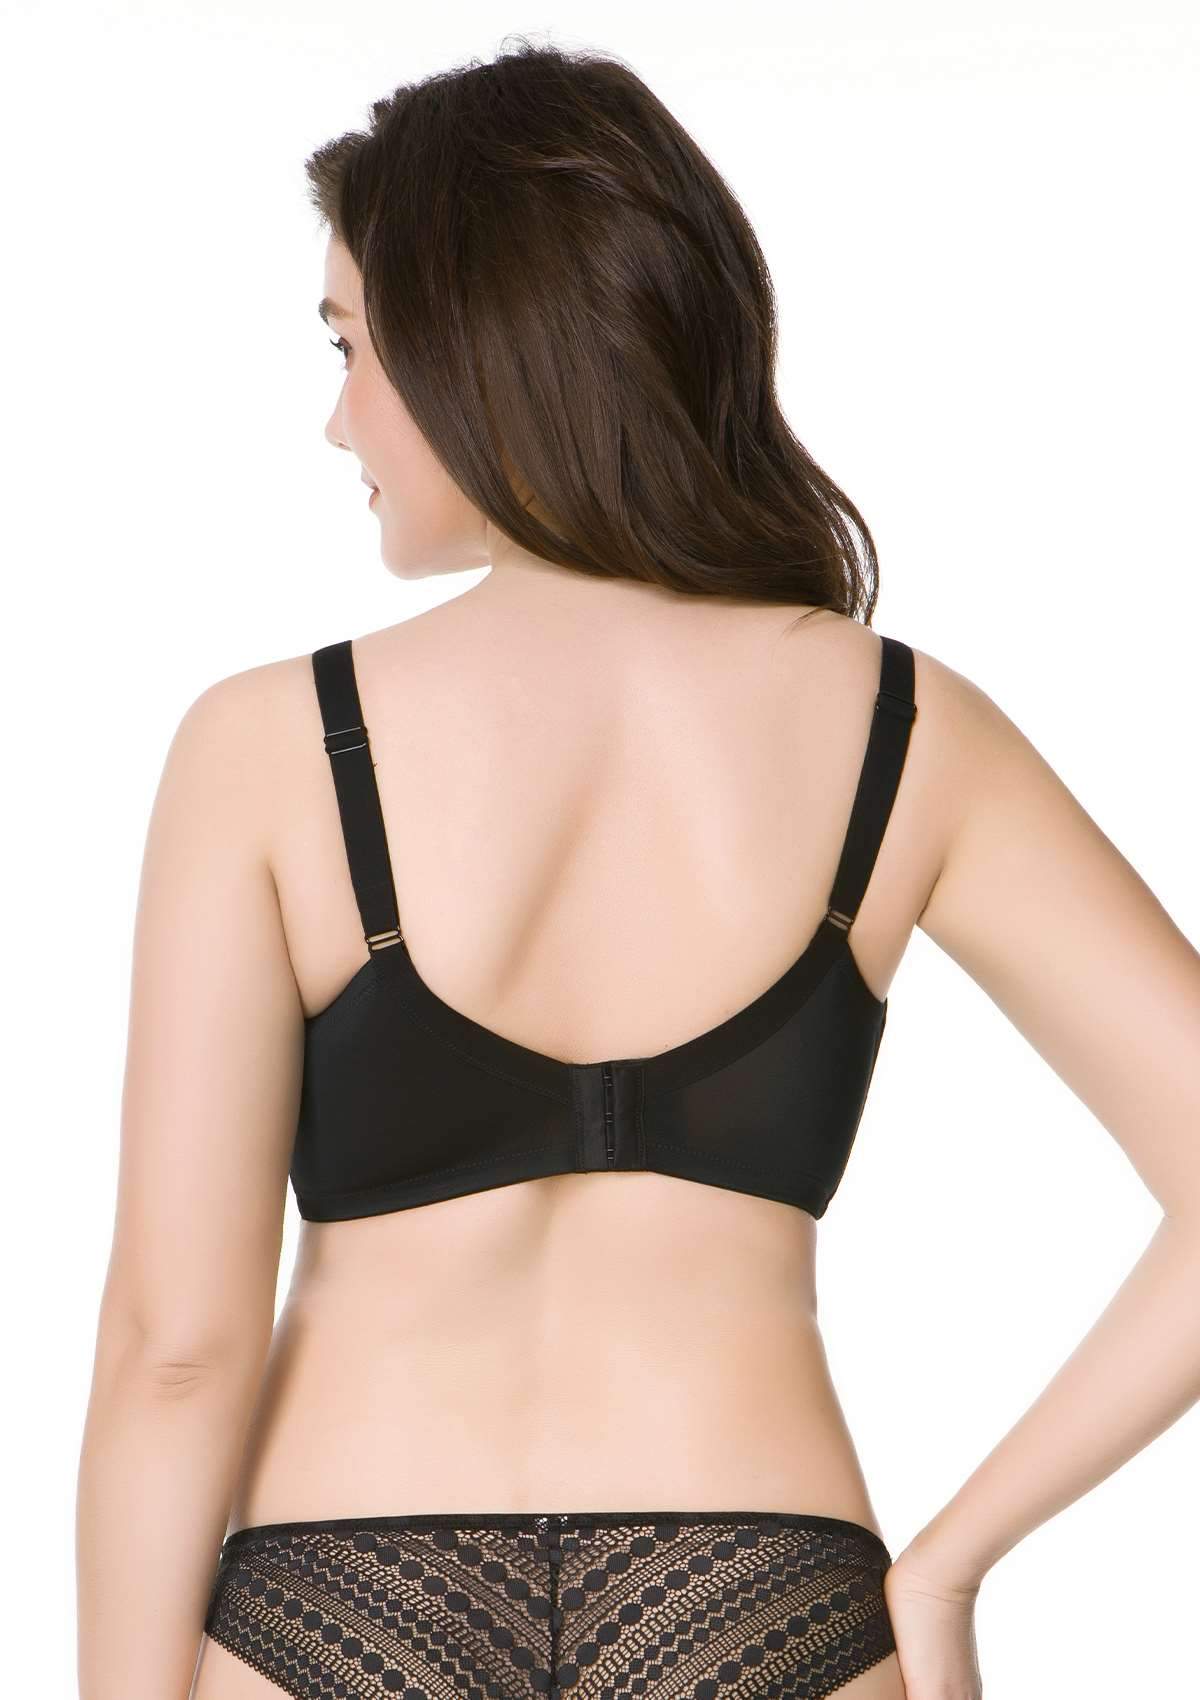 HSIA Heroine Matching Bra And Panties: Unlined Lace Unpadded Bra - Black / 40 / DDD/F